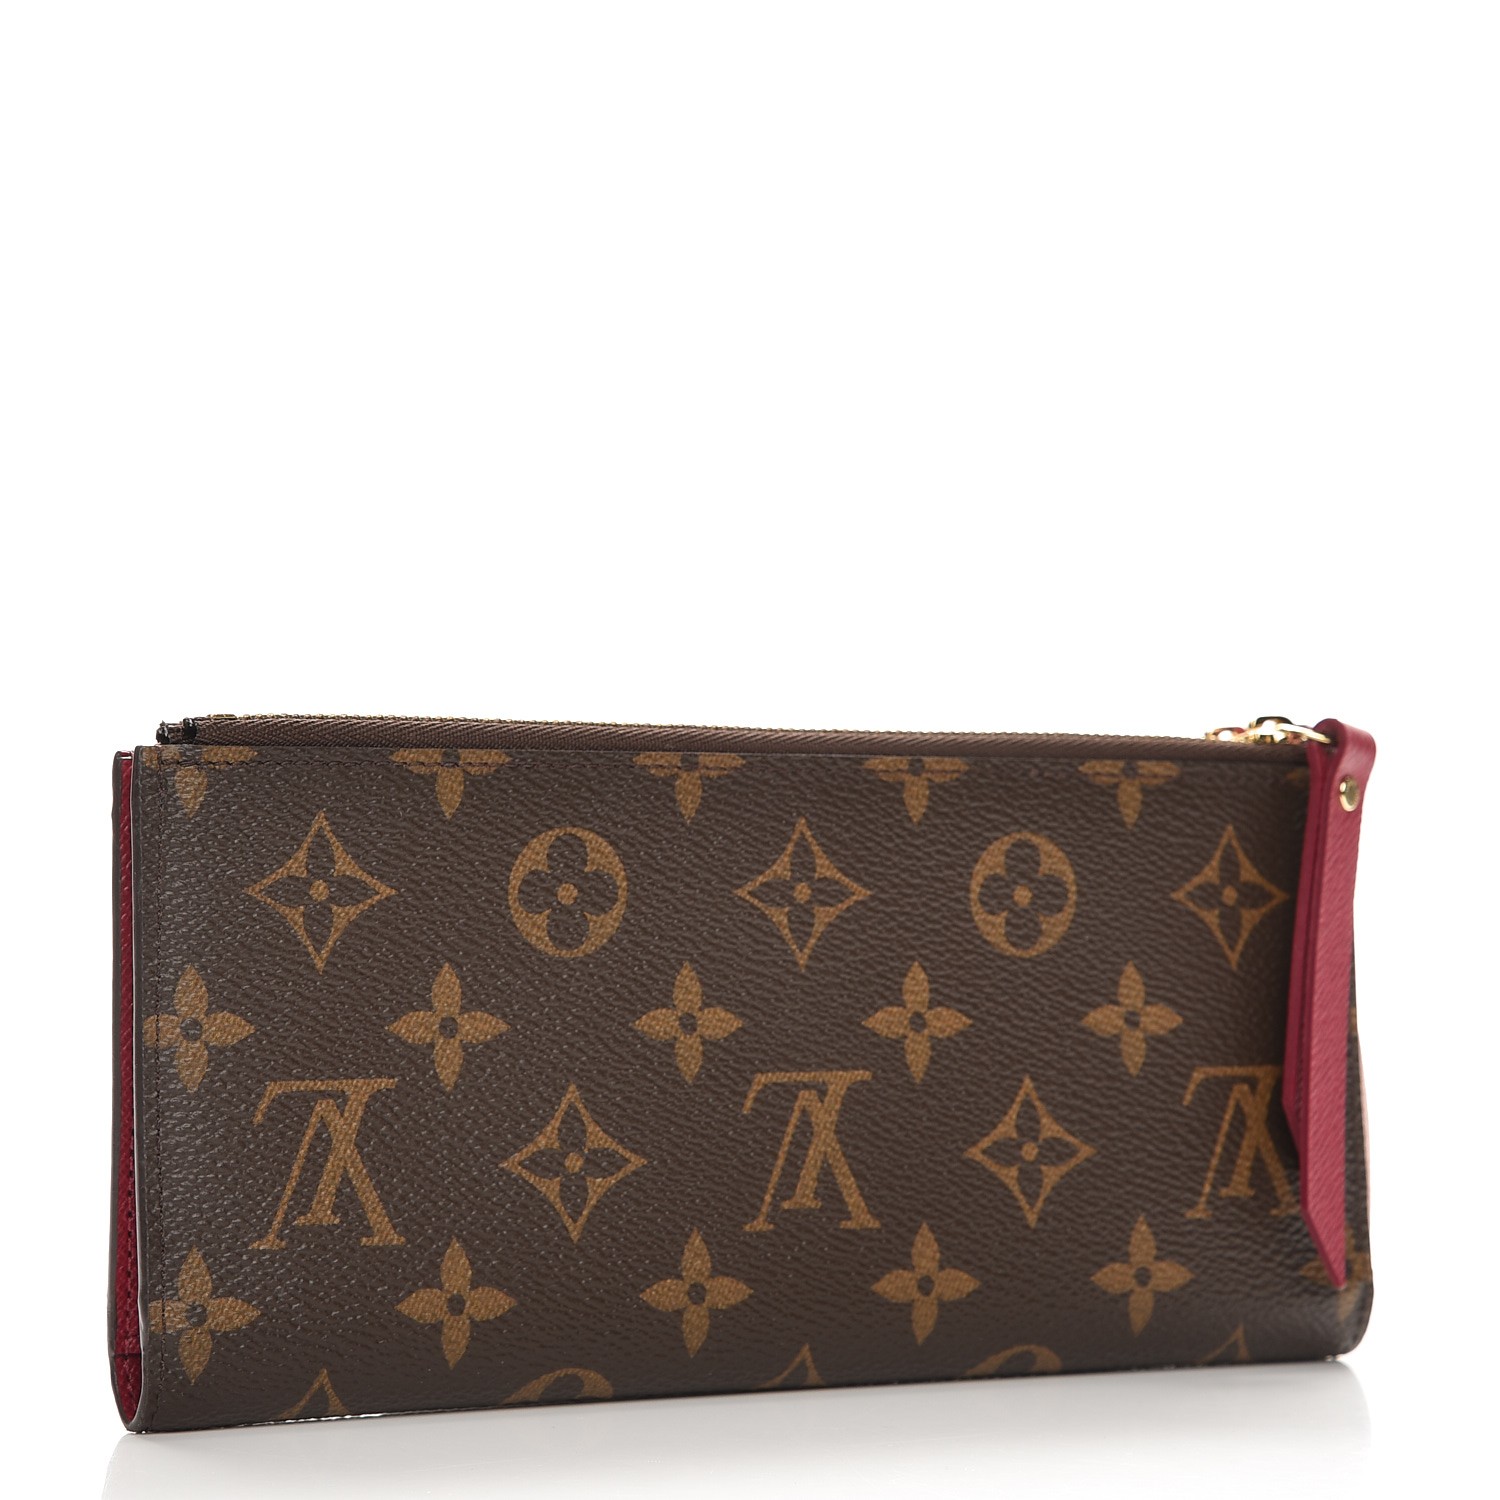 Fashionphile Unboxing! Louis Vuitton Compact Origami Wallet 